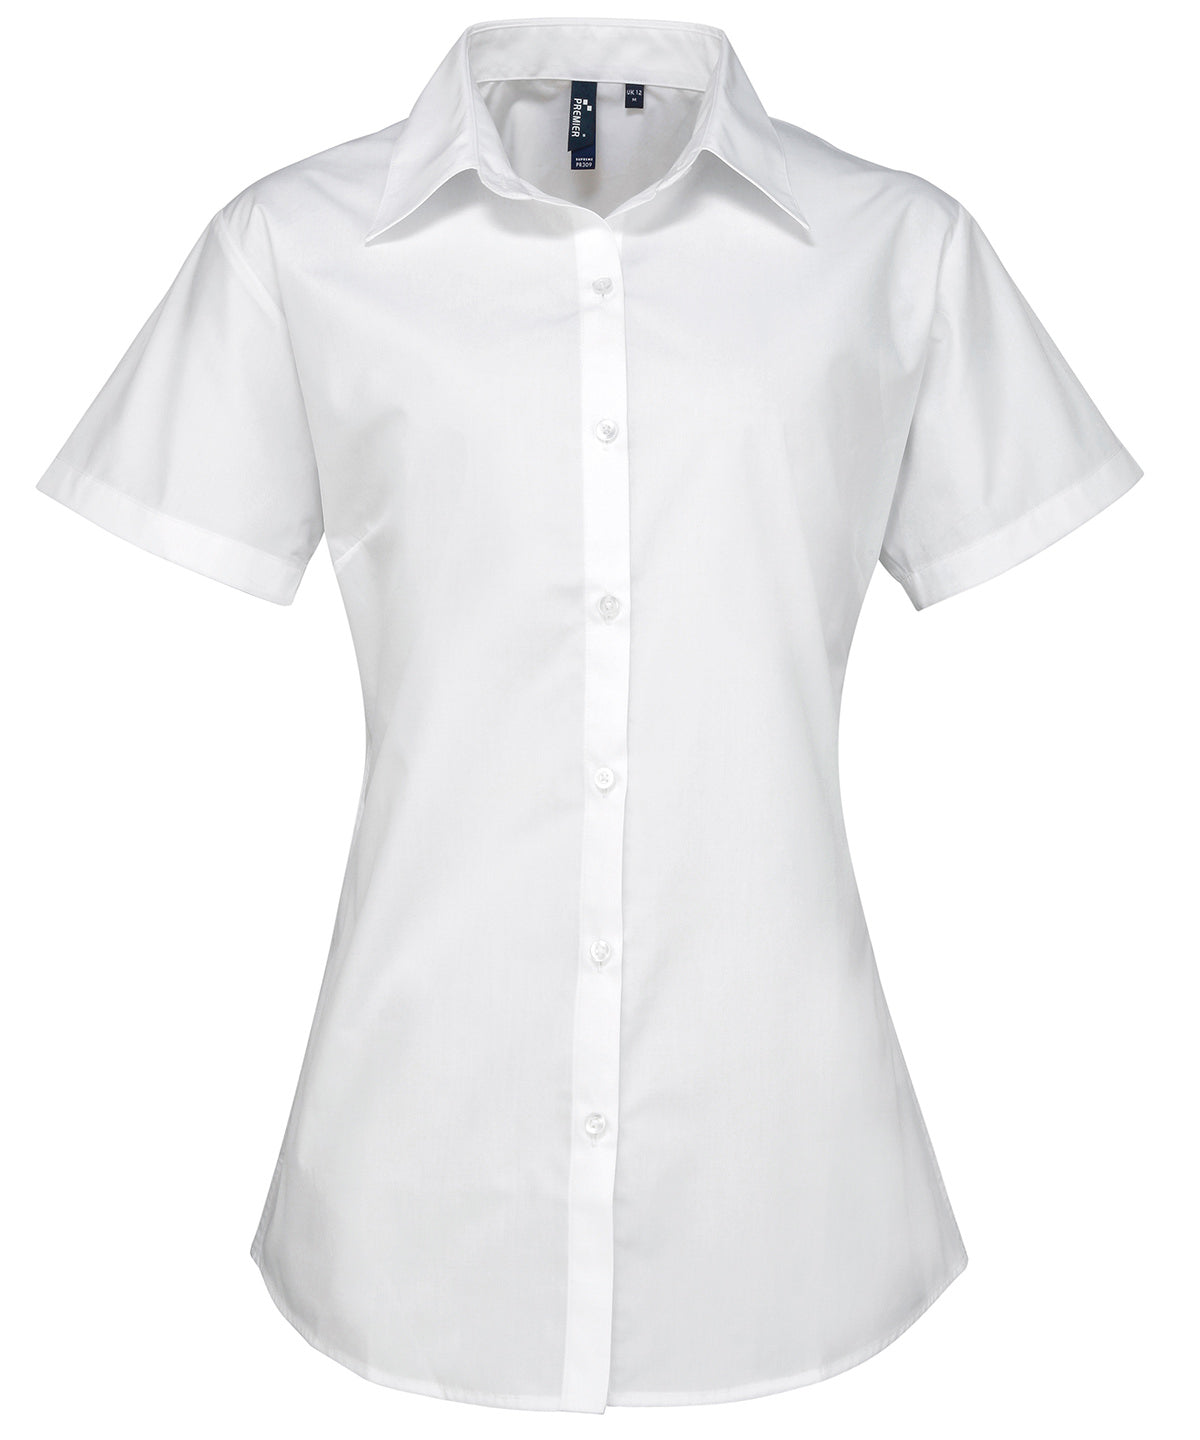 Bolir - Women's Supreme Poplin Short Sleeve Shirt